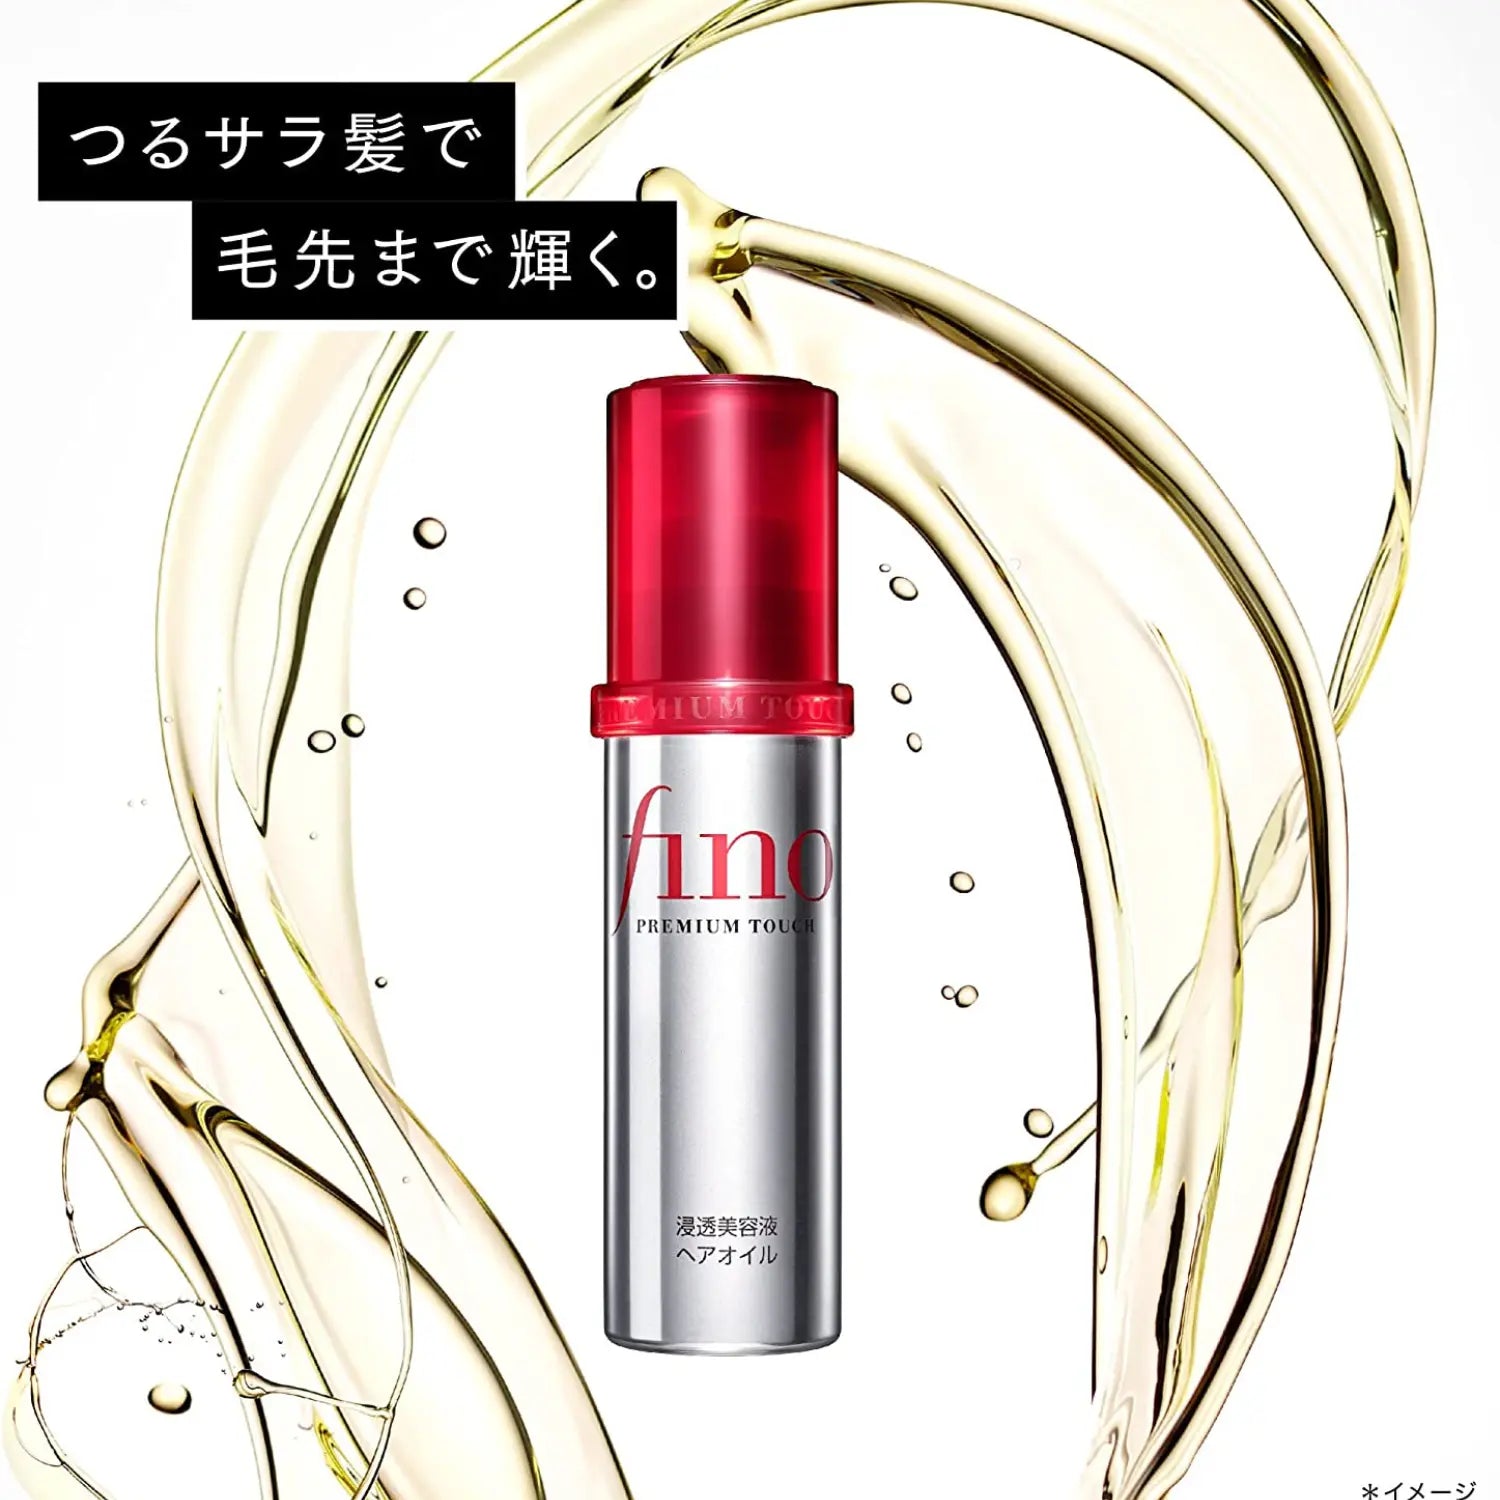 Shiseido Fino Hair Serum Treatment 70ml - Buy Me Japan